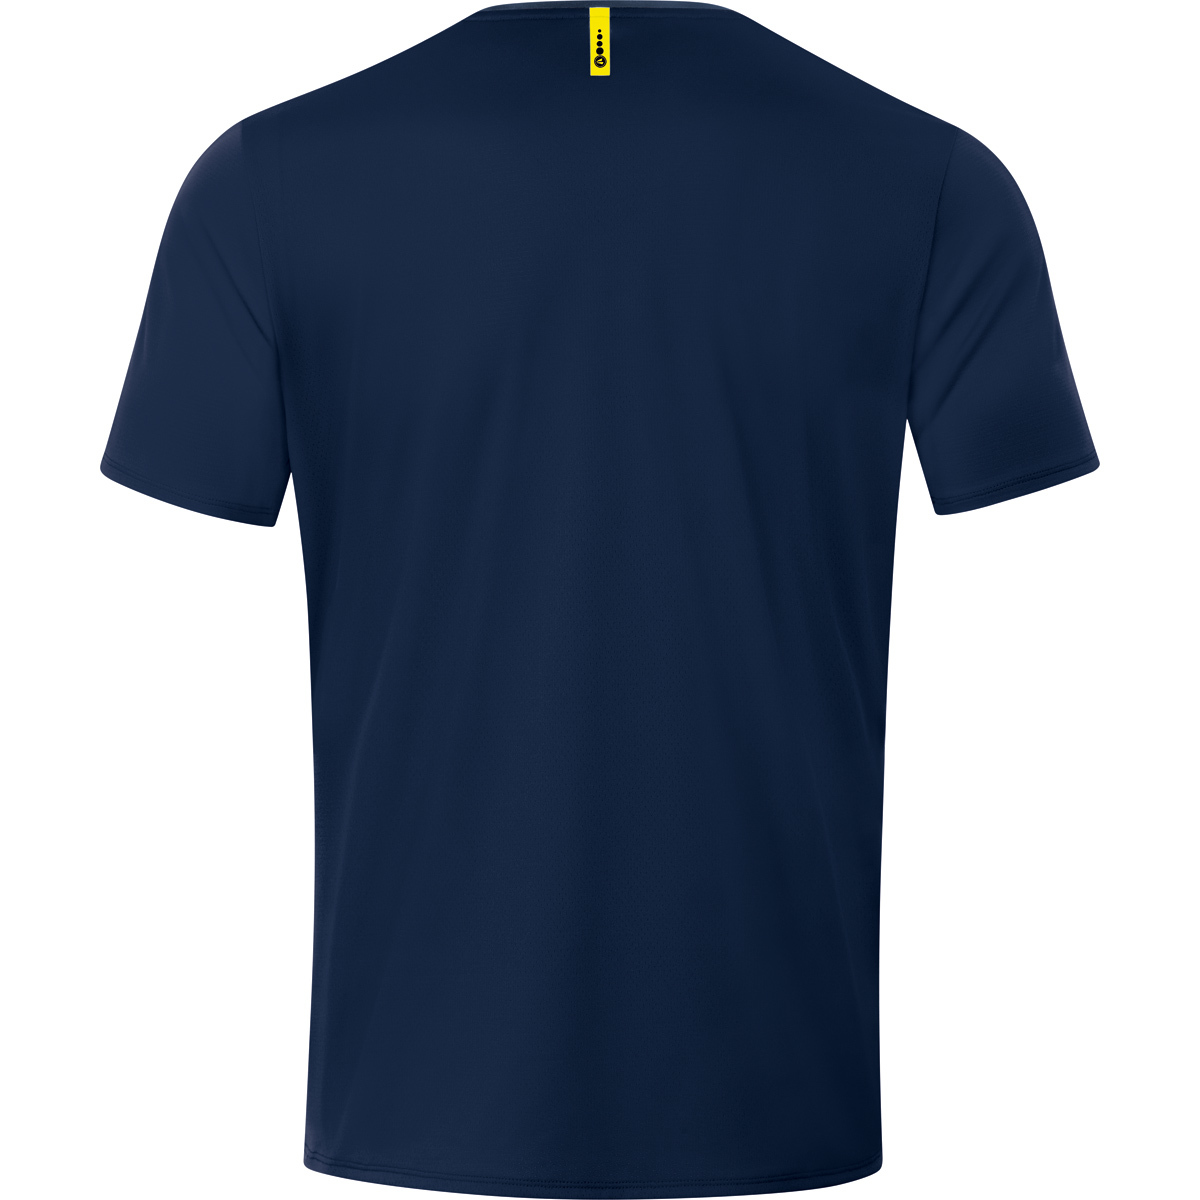 JAKO T-Shirt Champ Gr. XXL, Herren, marine/darkblue/neongelb, 2.0 6120